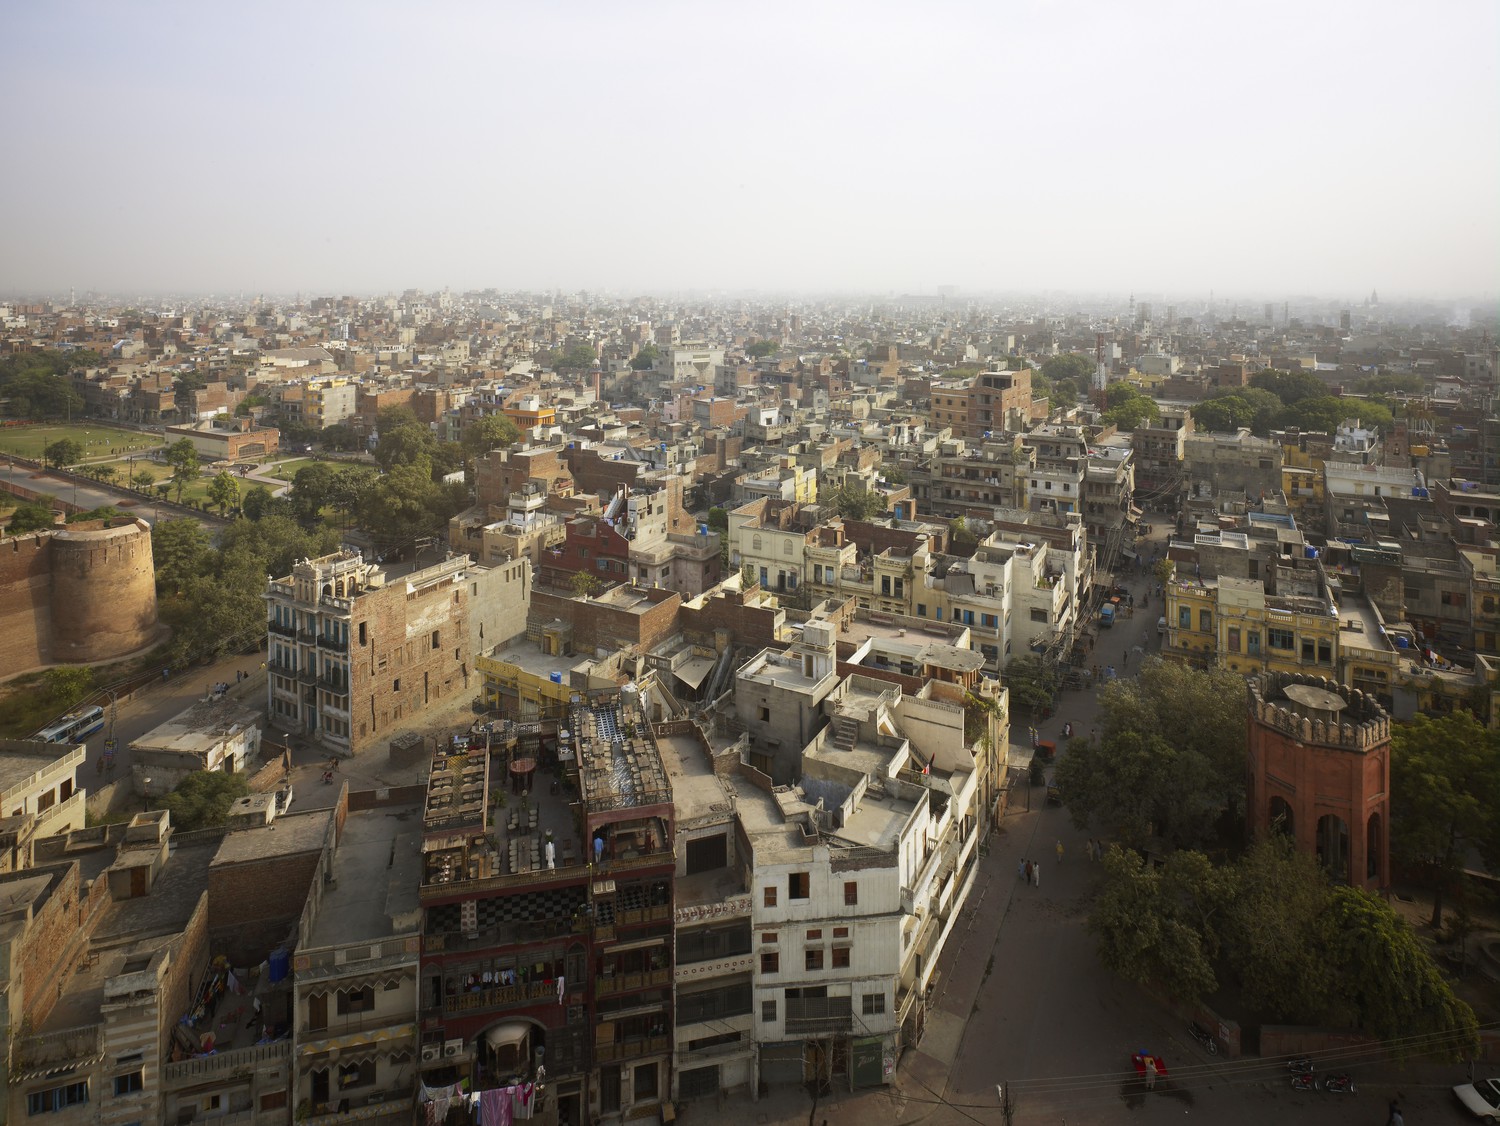 Aerial view over Shahi Guzargah neighbourhood